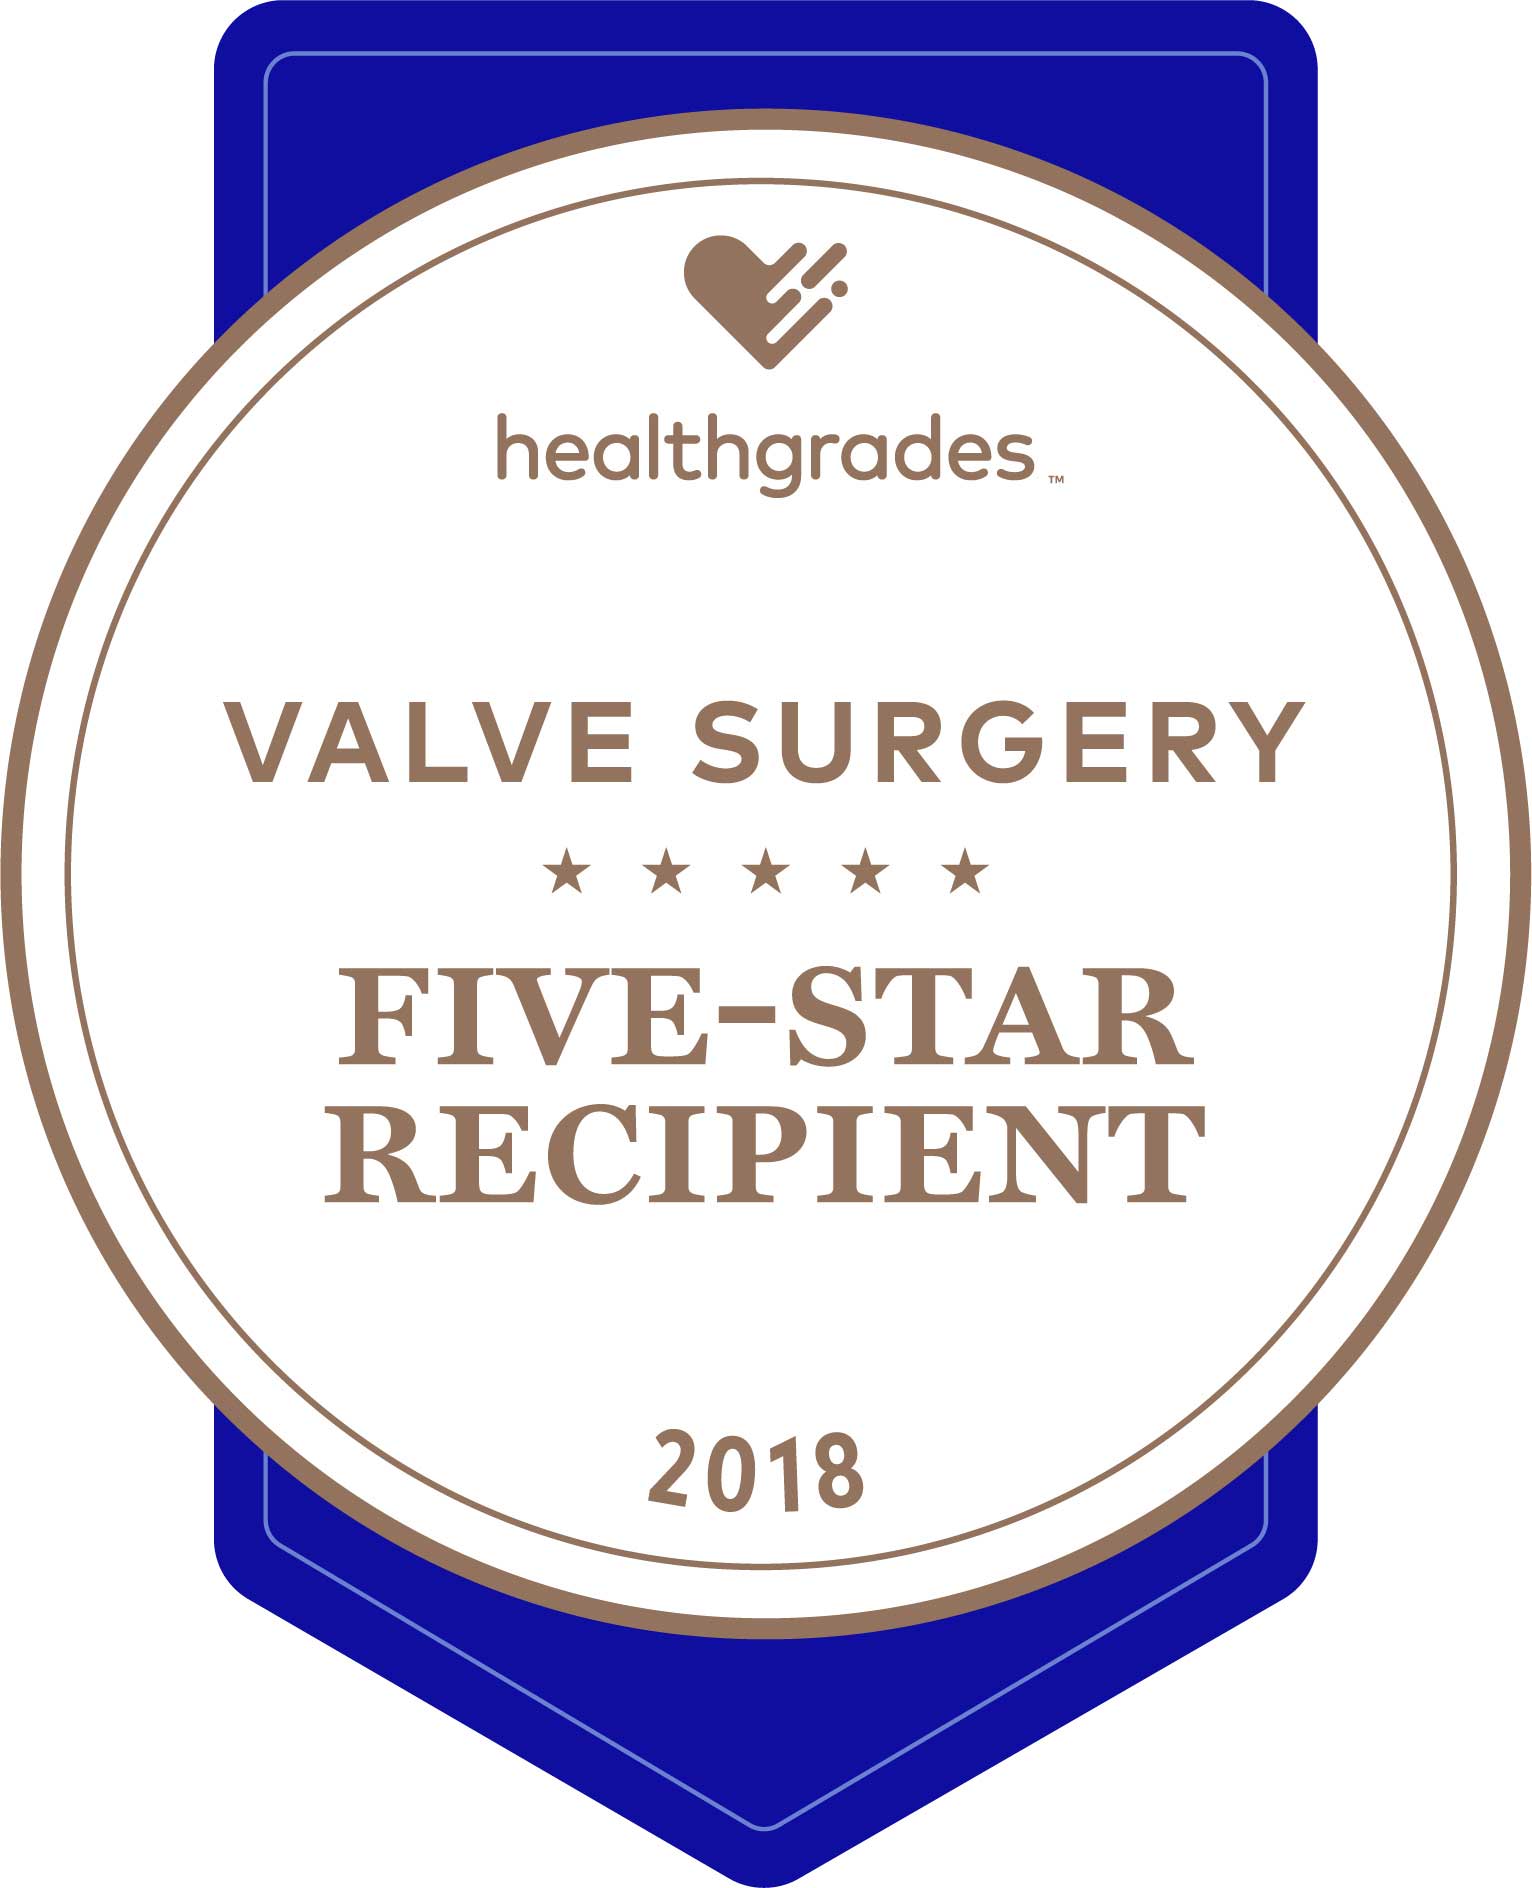 HG five star recipient - valve surgery